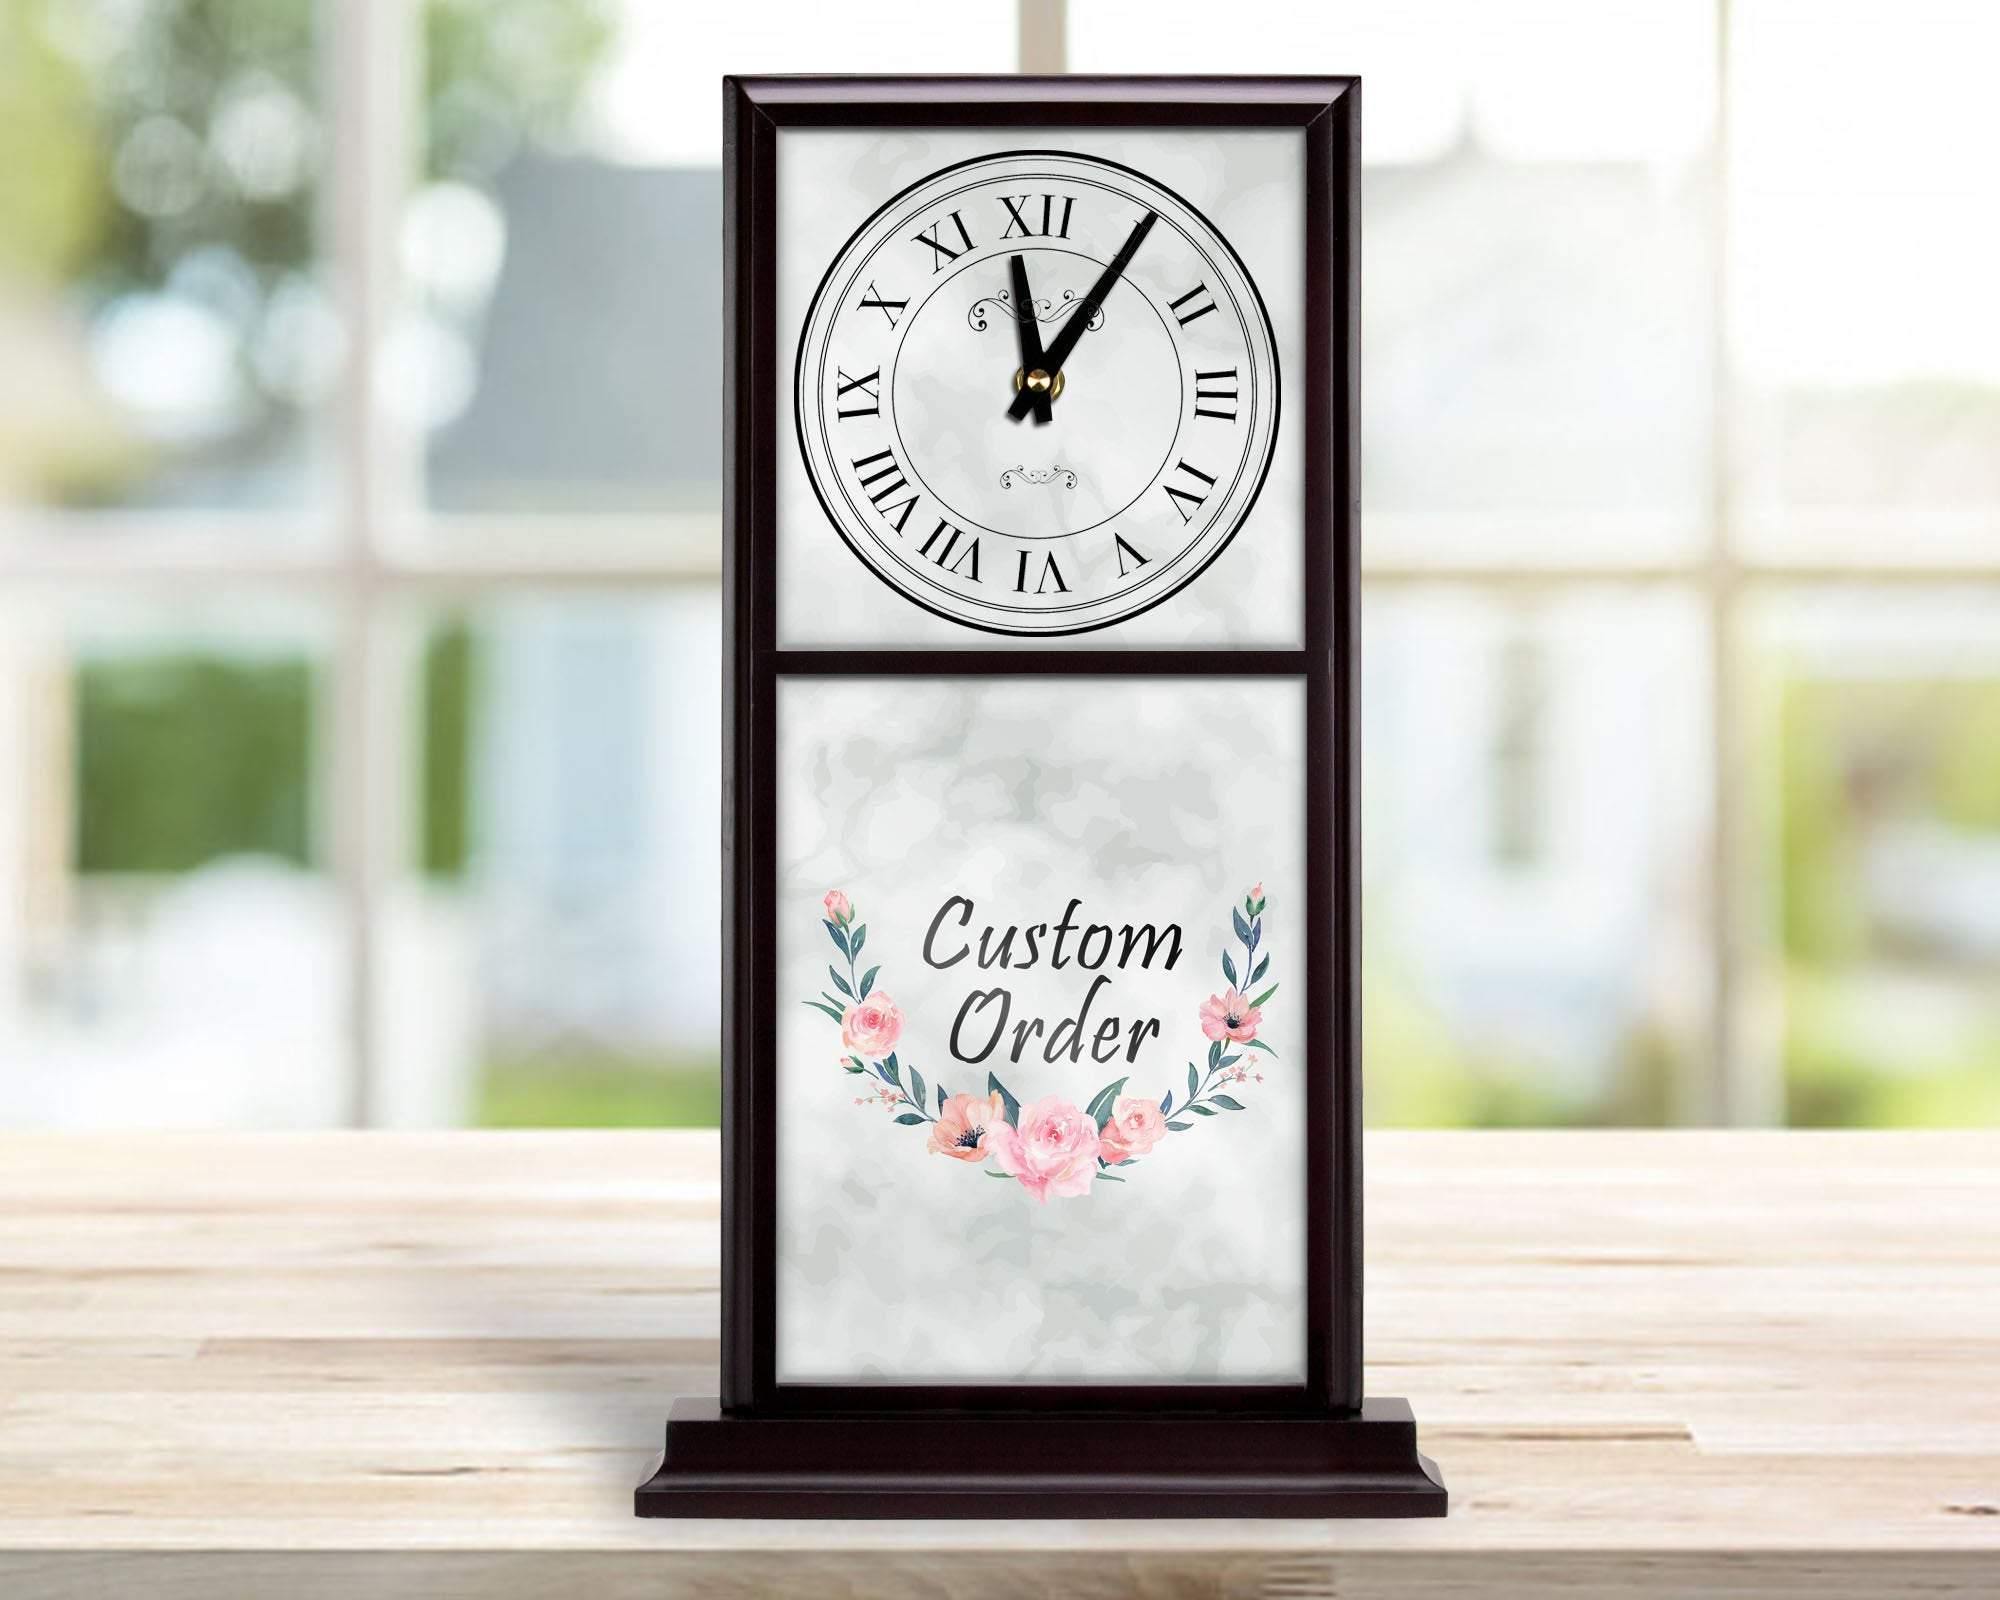 Personalized Mantle Clock | Custom Wall Decor | Custom Order - This & That Solutions - Personalized Mantle Clock | Custom Wall Decor | Custom Order - Personalized Gifts & Custom Home Decor